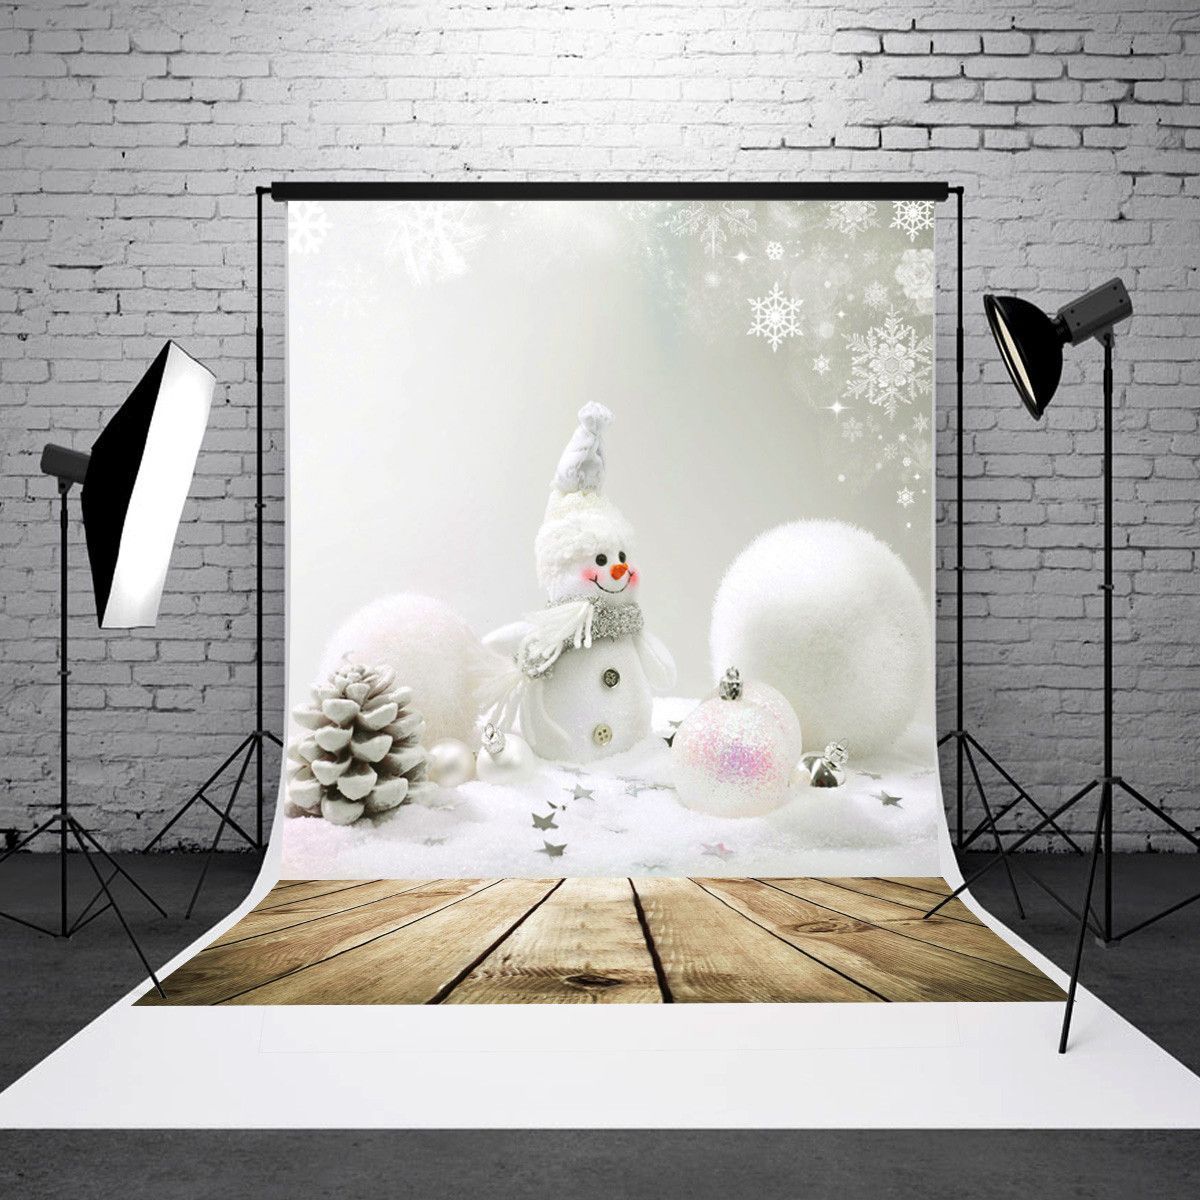 5x7ft-Christmas-Snowman-Wall-Board-Studio-Photo-Photography-Background-Backdrop-1092115